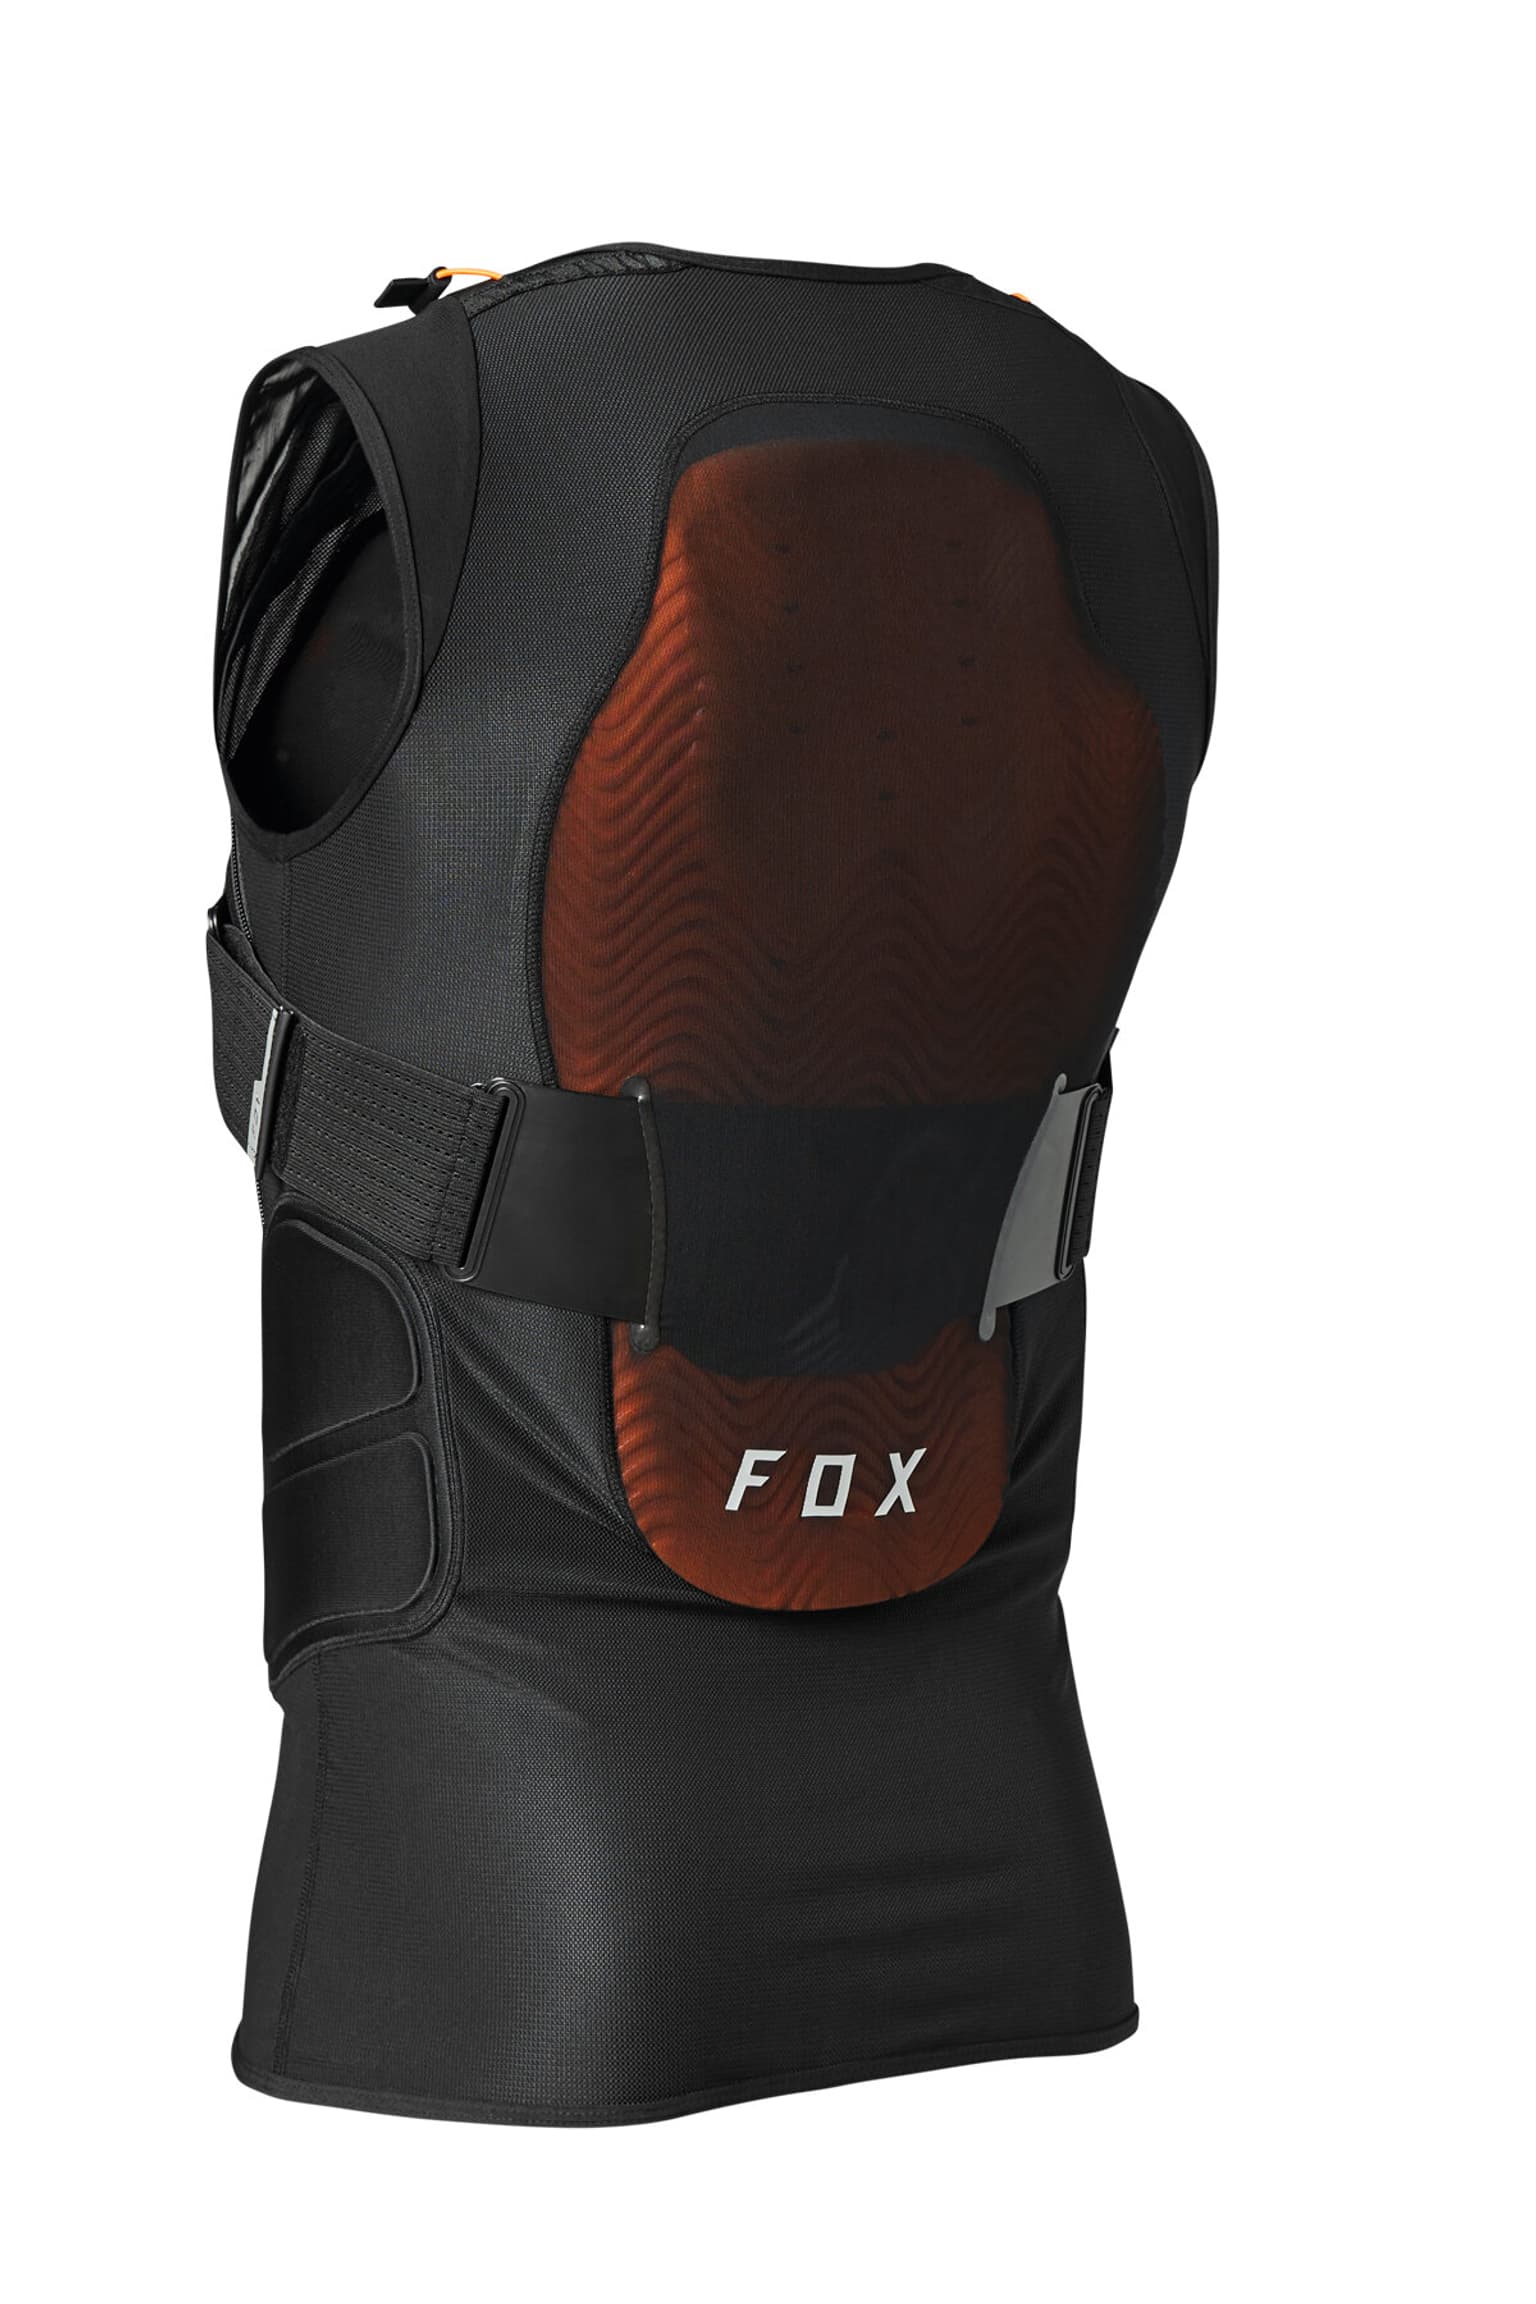 Fox Fox Baseframe Pro D3 Protektoren nero 2